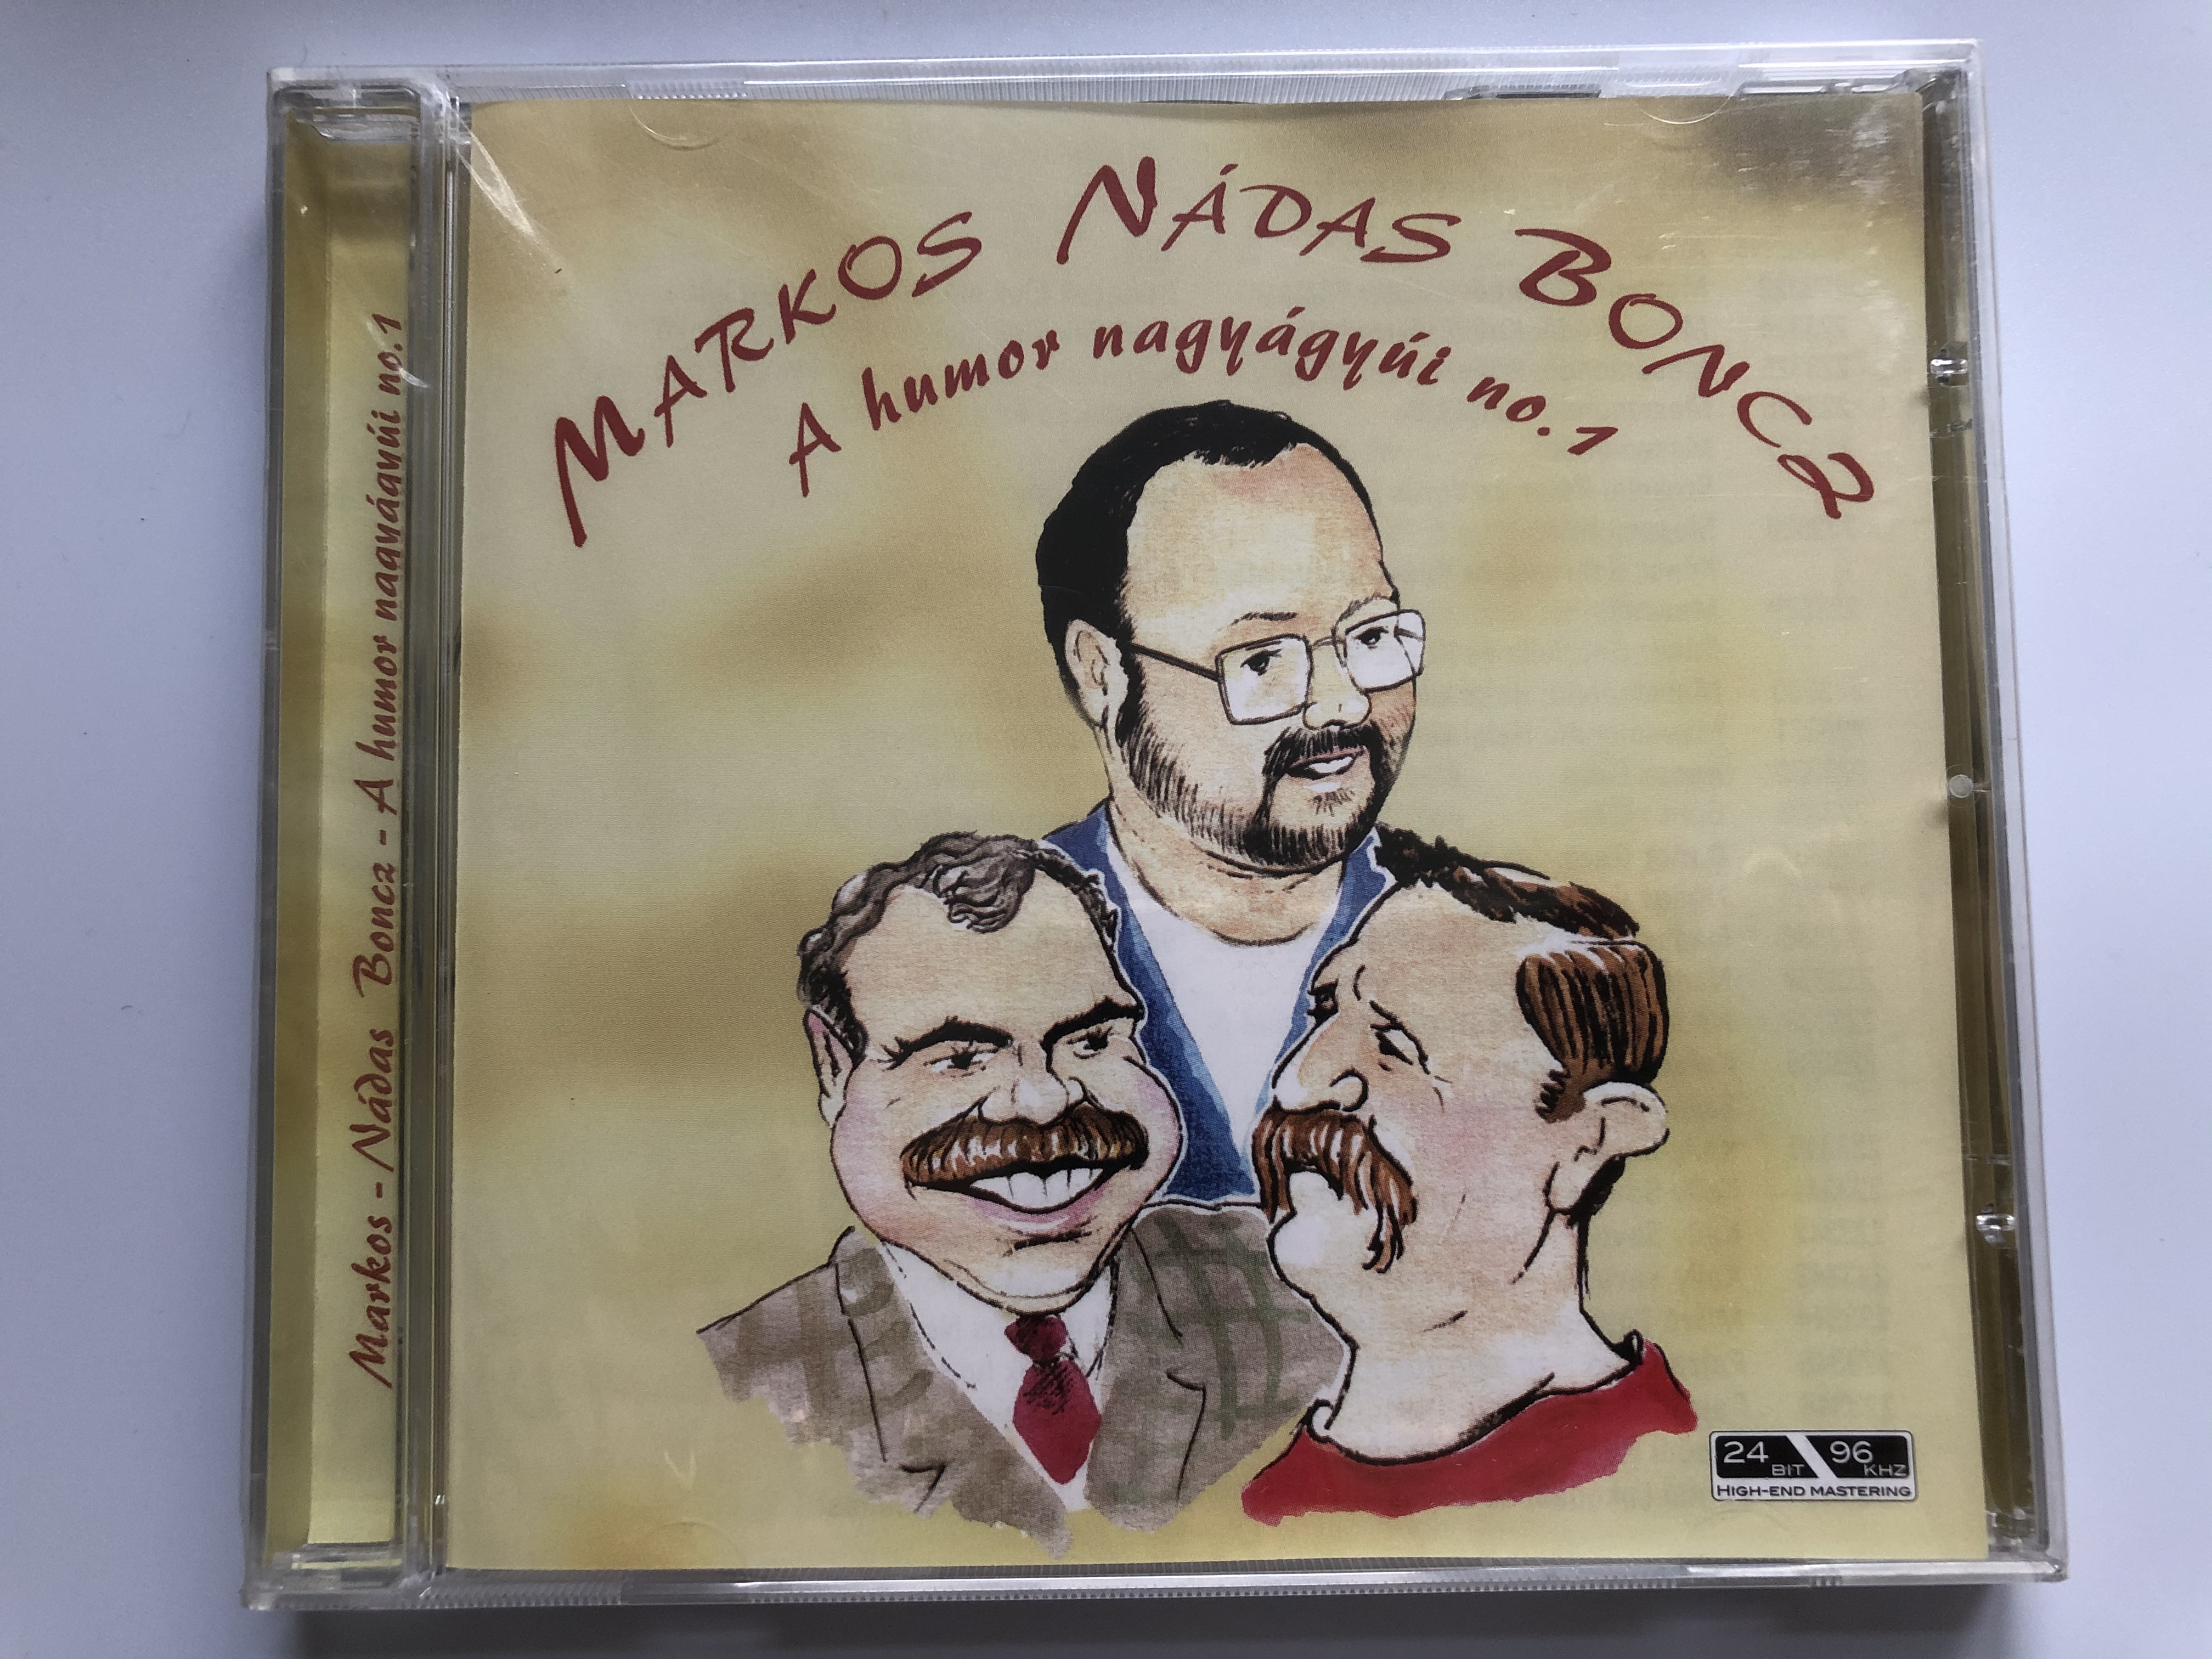 markos-n-das-boncz-a-humor-nagy-gy-i-no.1-membran-music-ltd.-audio-cd-2005-223-367-1-.jpg